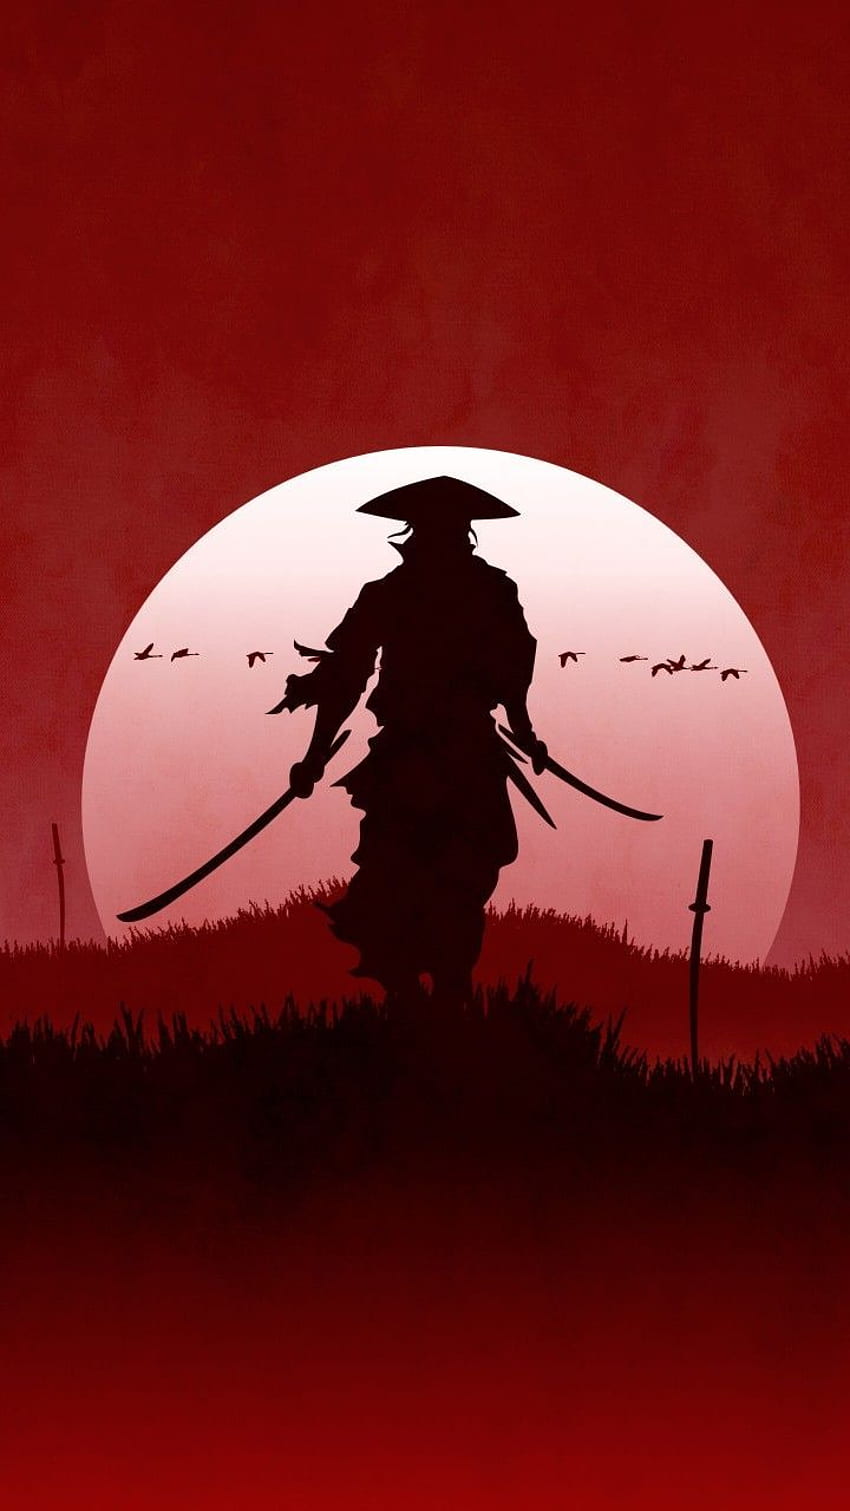 Rurouni Kenshin  Tatuajes de vegeta, Guerrero samurai, Tatuajes de animes